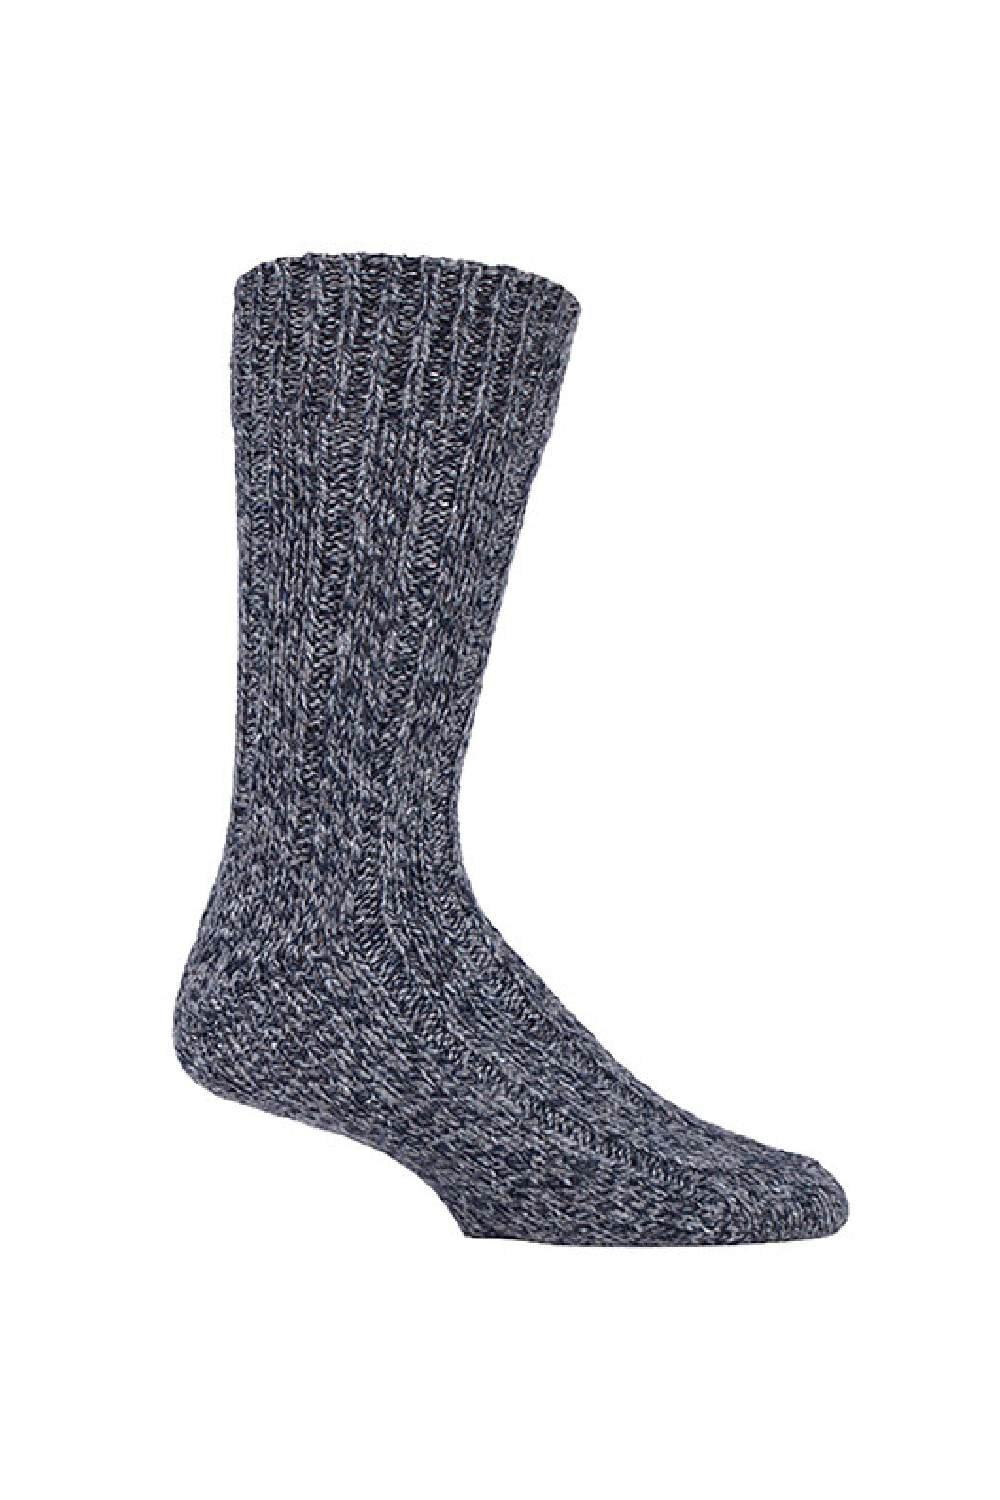 Heavy Kntted Wool Hiking Socks for Walking